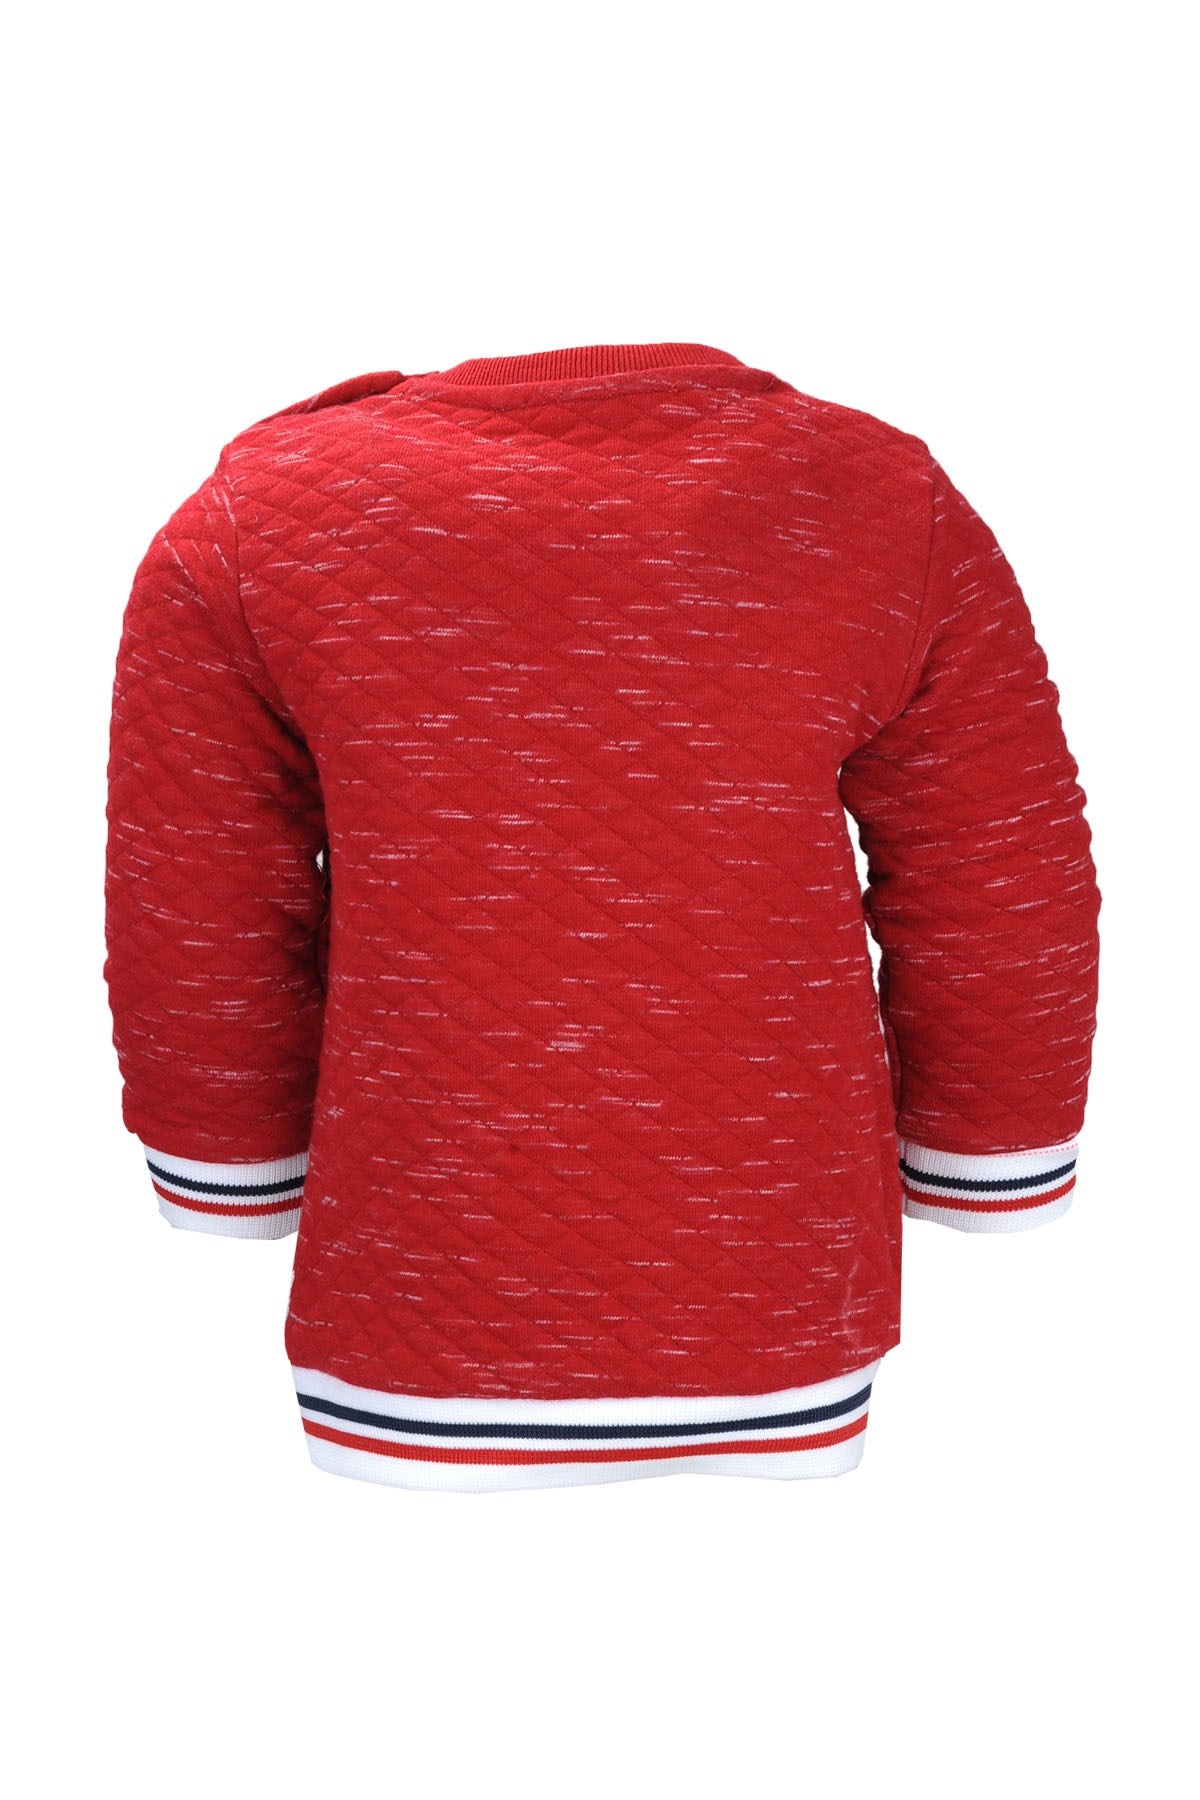 Erkek Bebek Kırmızı Sweatshirt (9ay-4yaş)-1